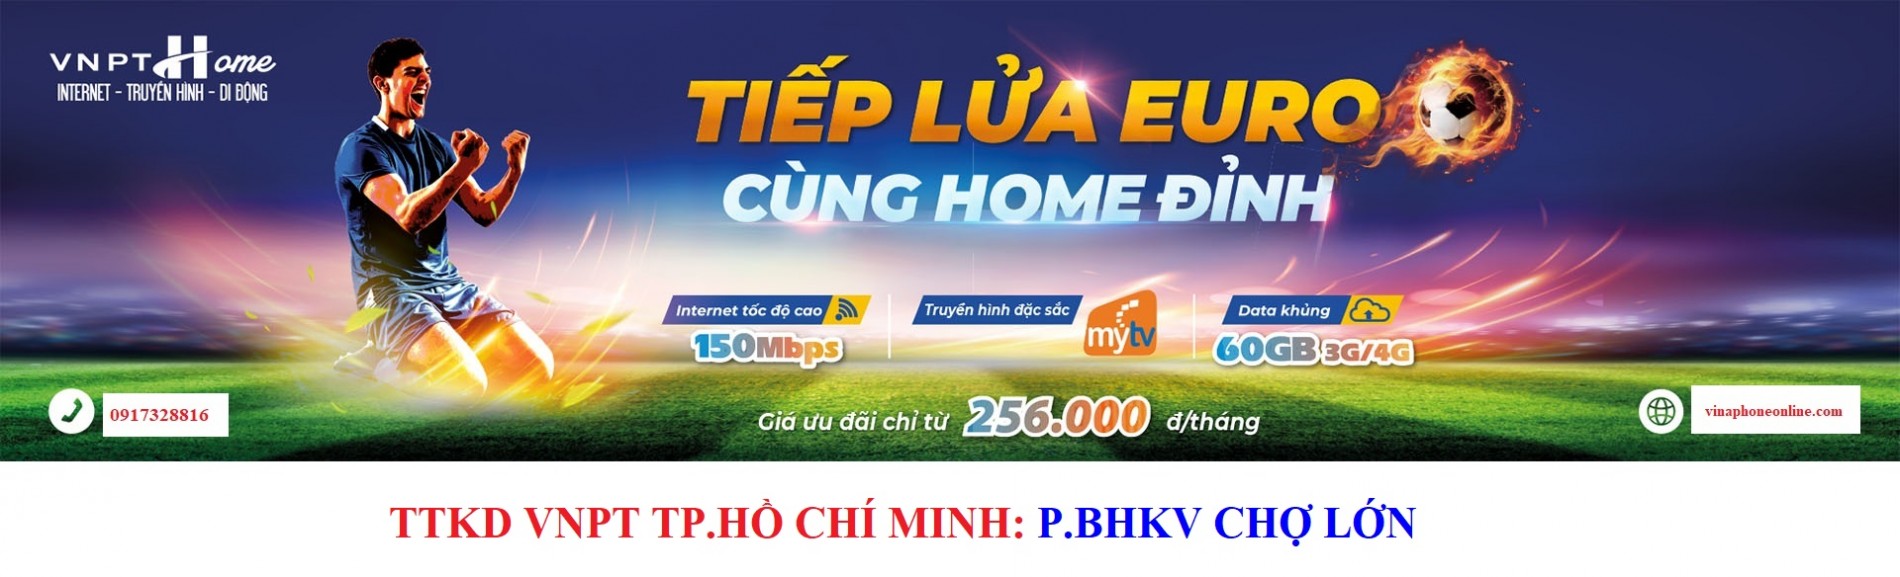 cl_tiep-lua-home-dinh-1920x446-1622802853